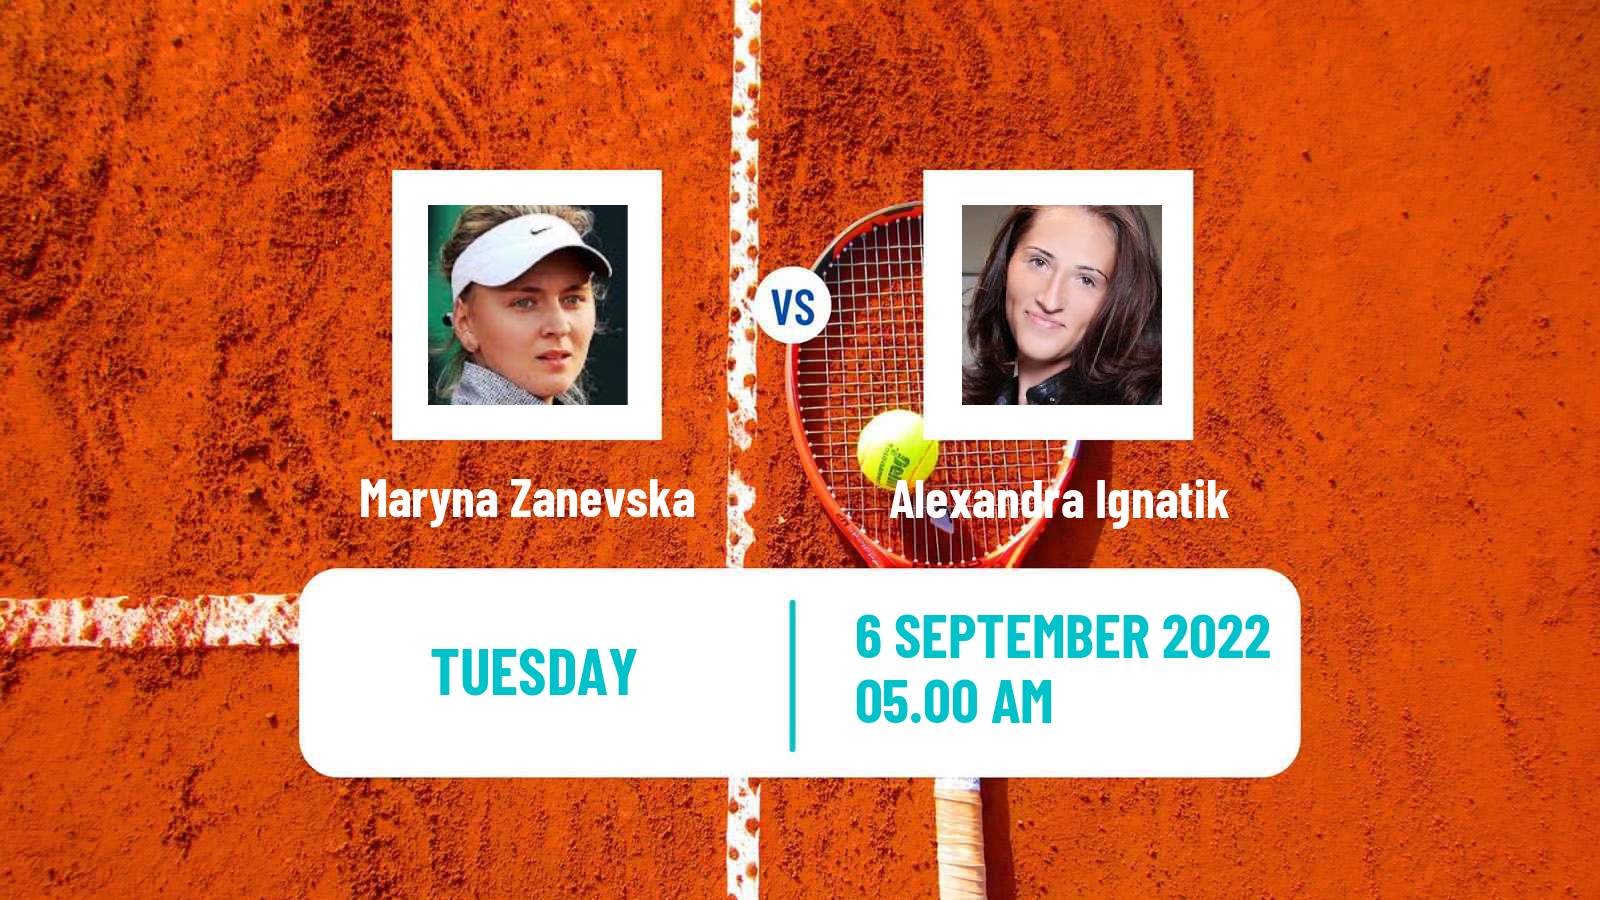 Tennis ATP Challenger Maryna Zanevska - Alexandra Ignatik